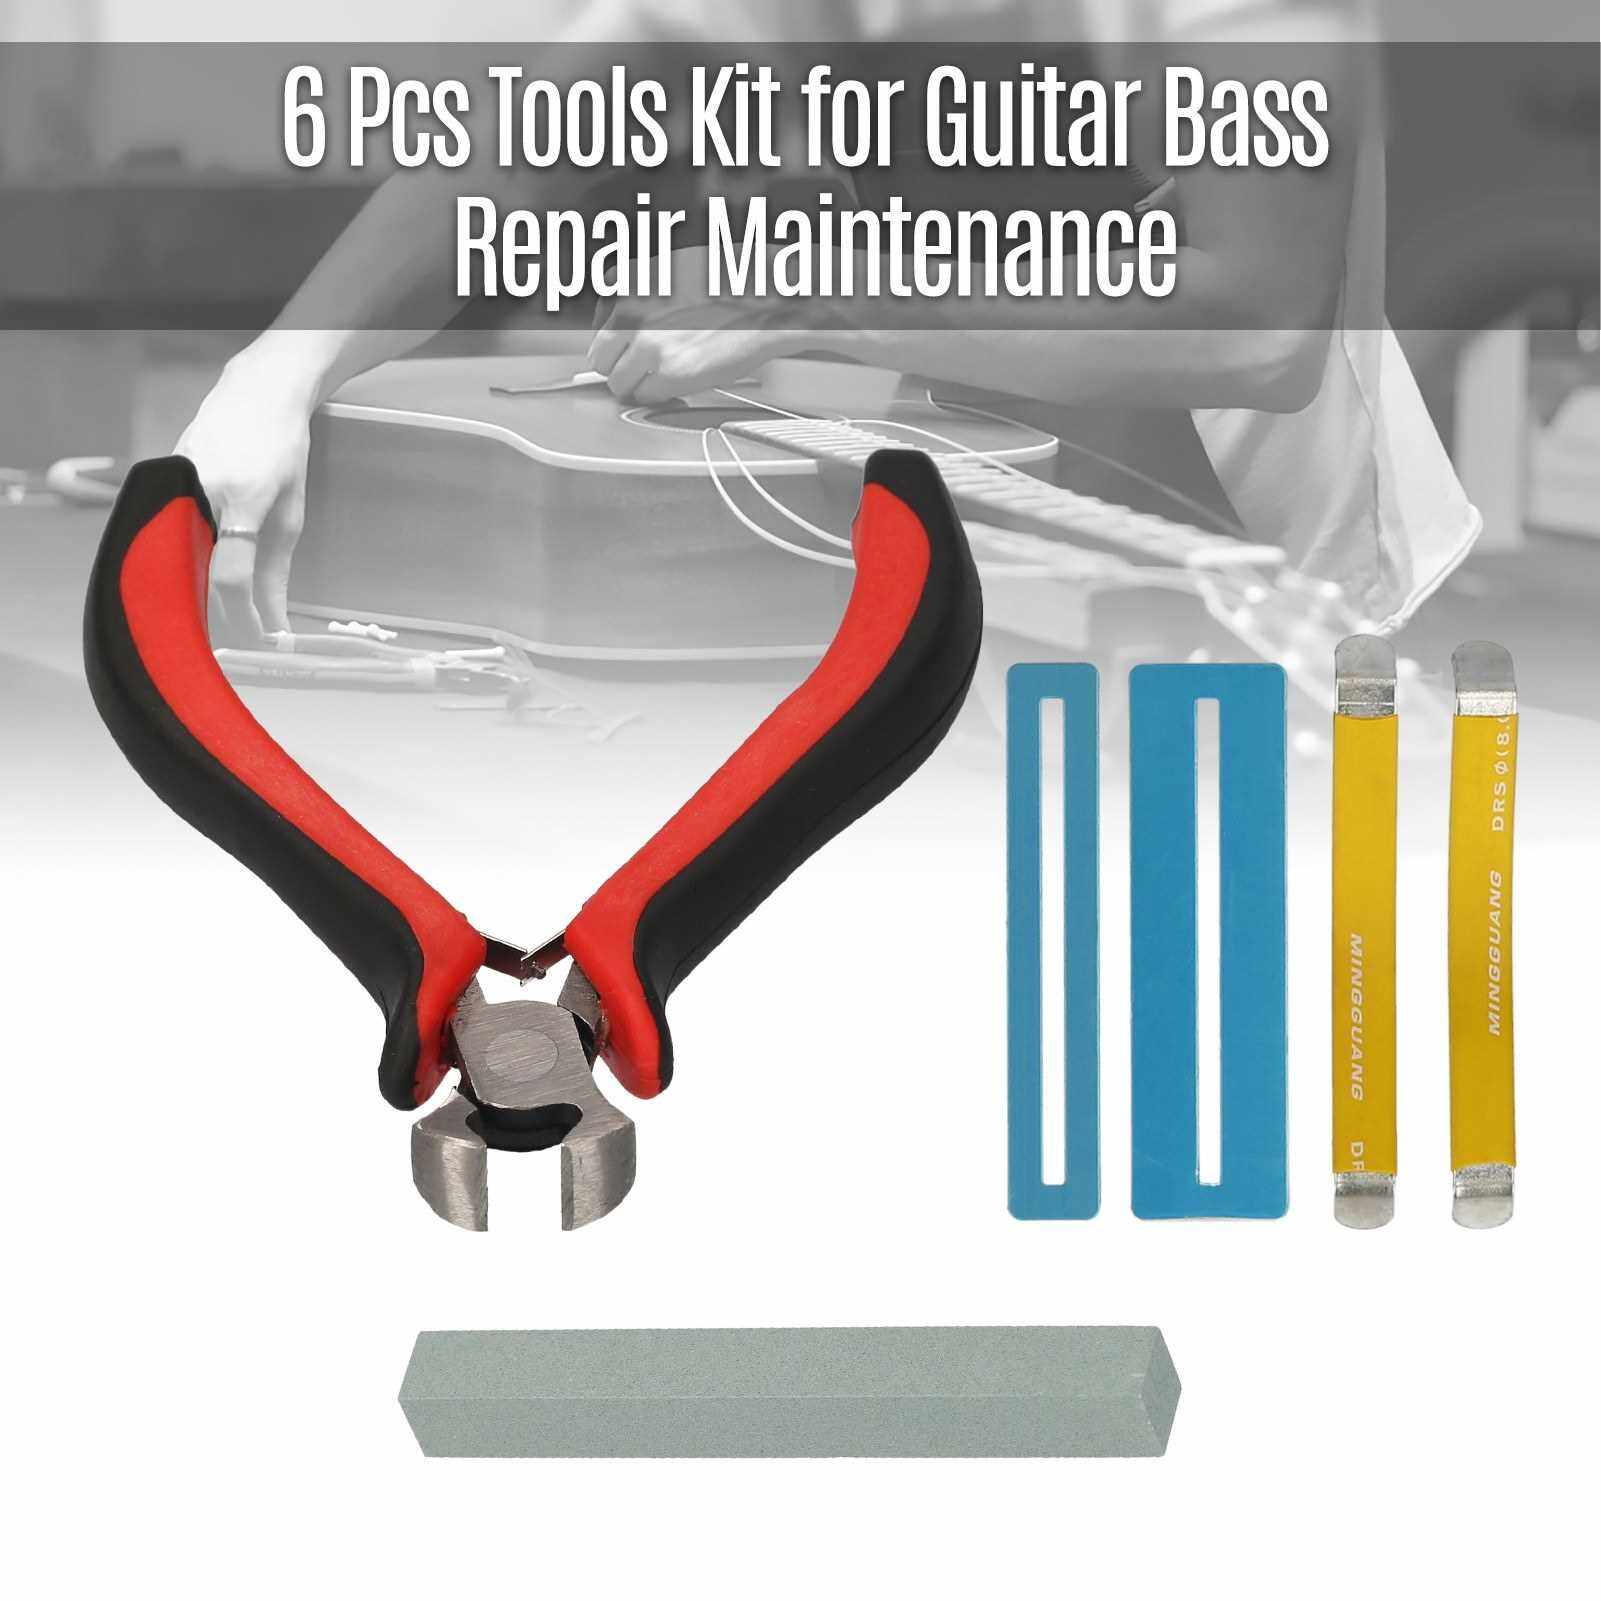 6Pcs Guitar Tools Kit Repair Maintenance Tool for Guitar Bass Luthier 2 String Separators, 2 Fingerboard Protectors, 1 String Cutter Plier, 1 Sanding Stone (Standard)